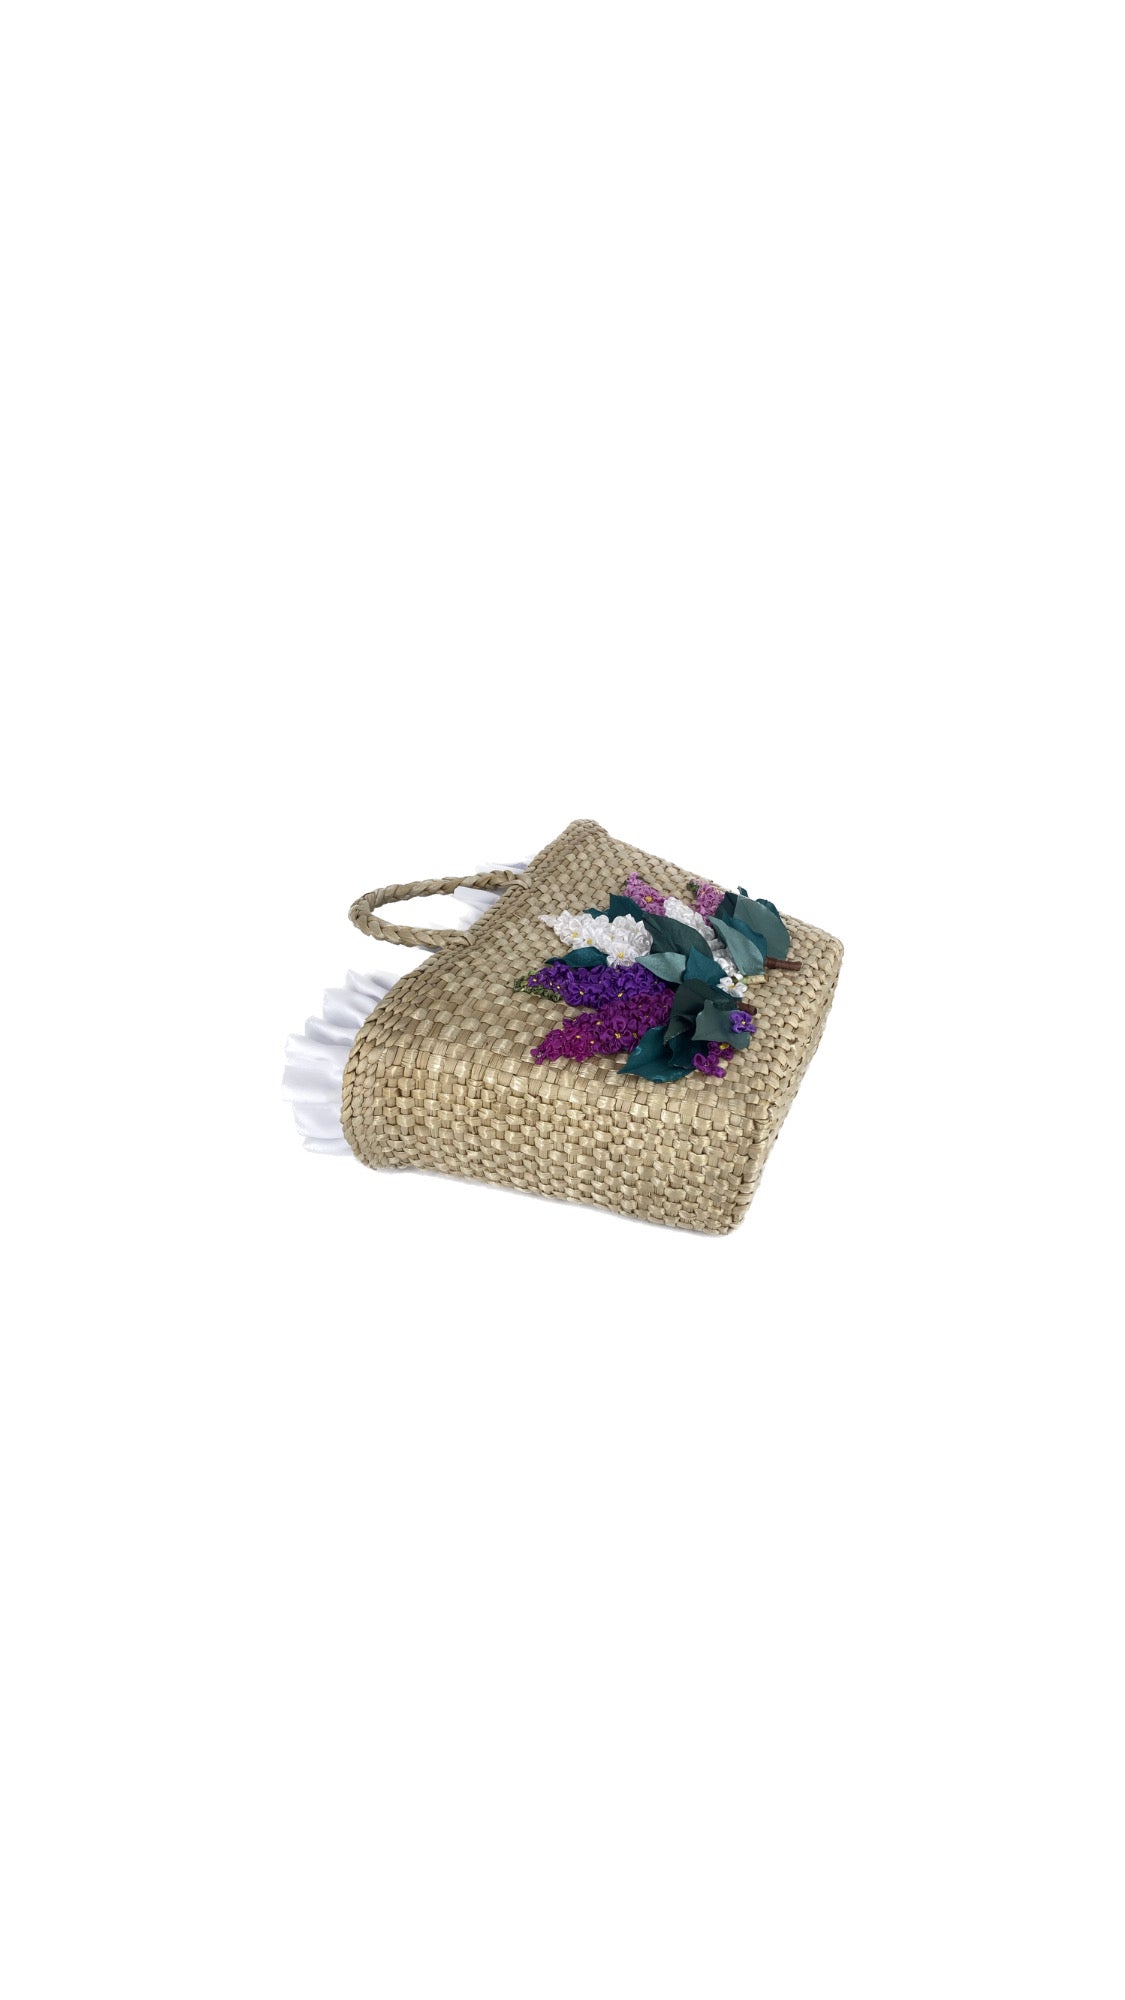 COPY - Zara Multicolored Fringe Bucket Bag Purse